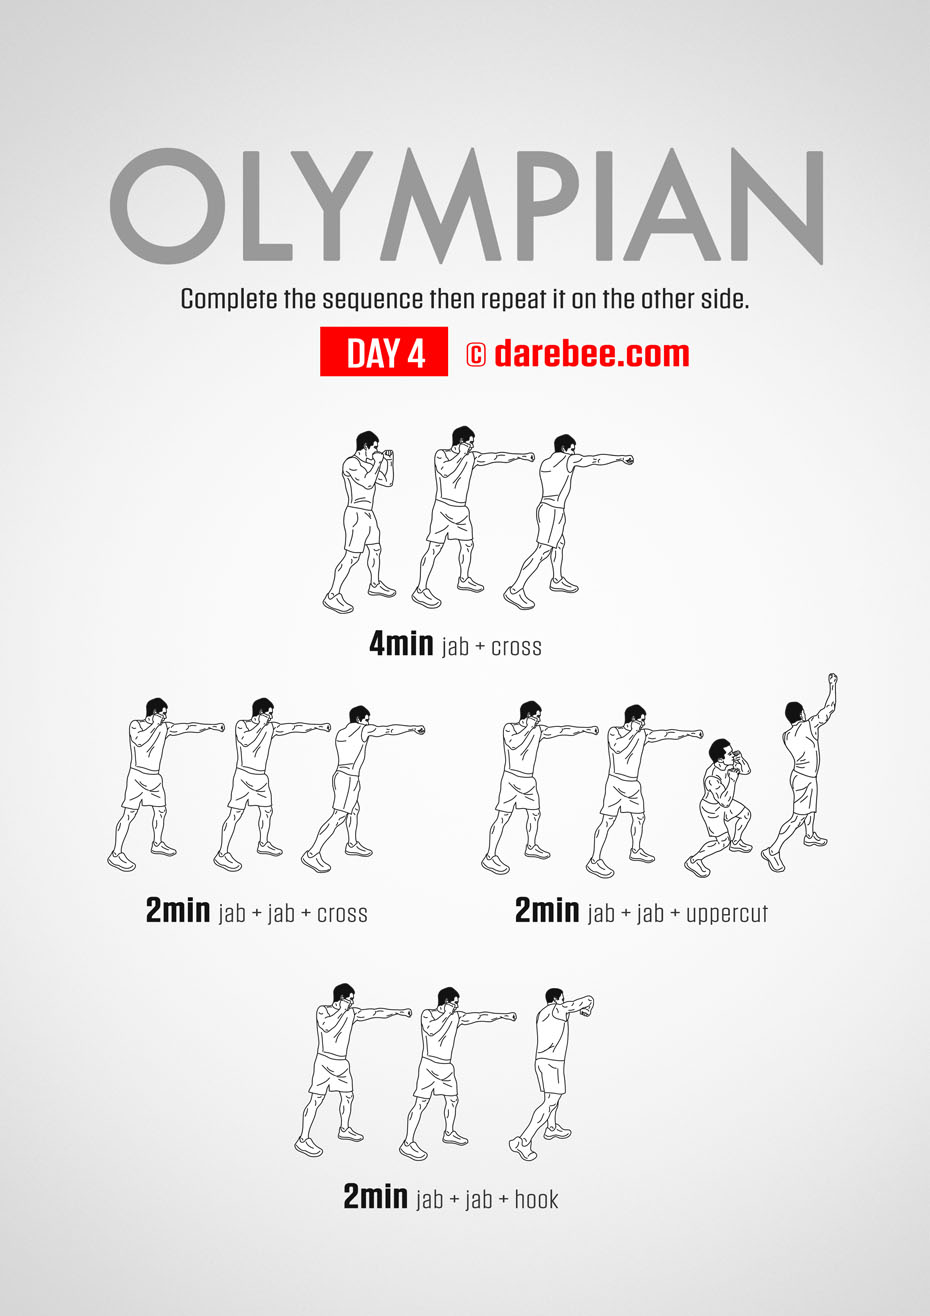 The Olympian - No-Equipment Fitness Program by DAREBEE